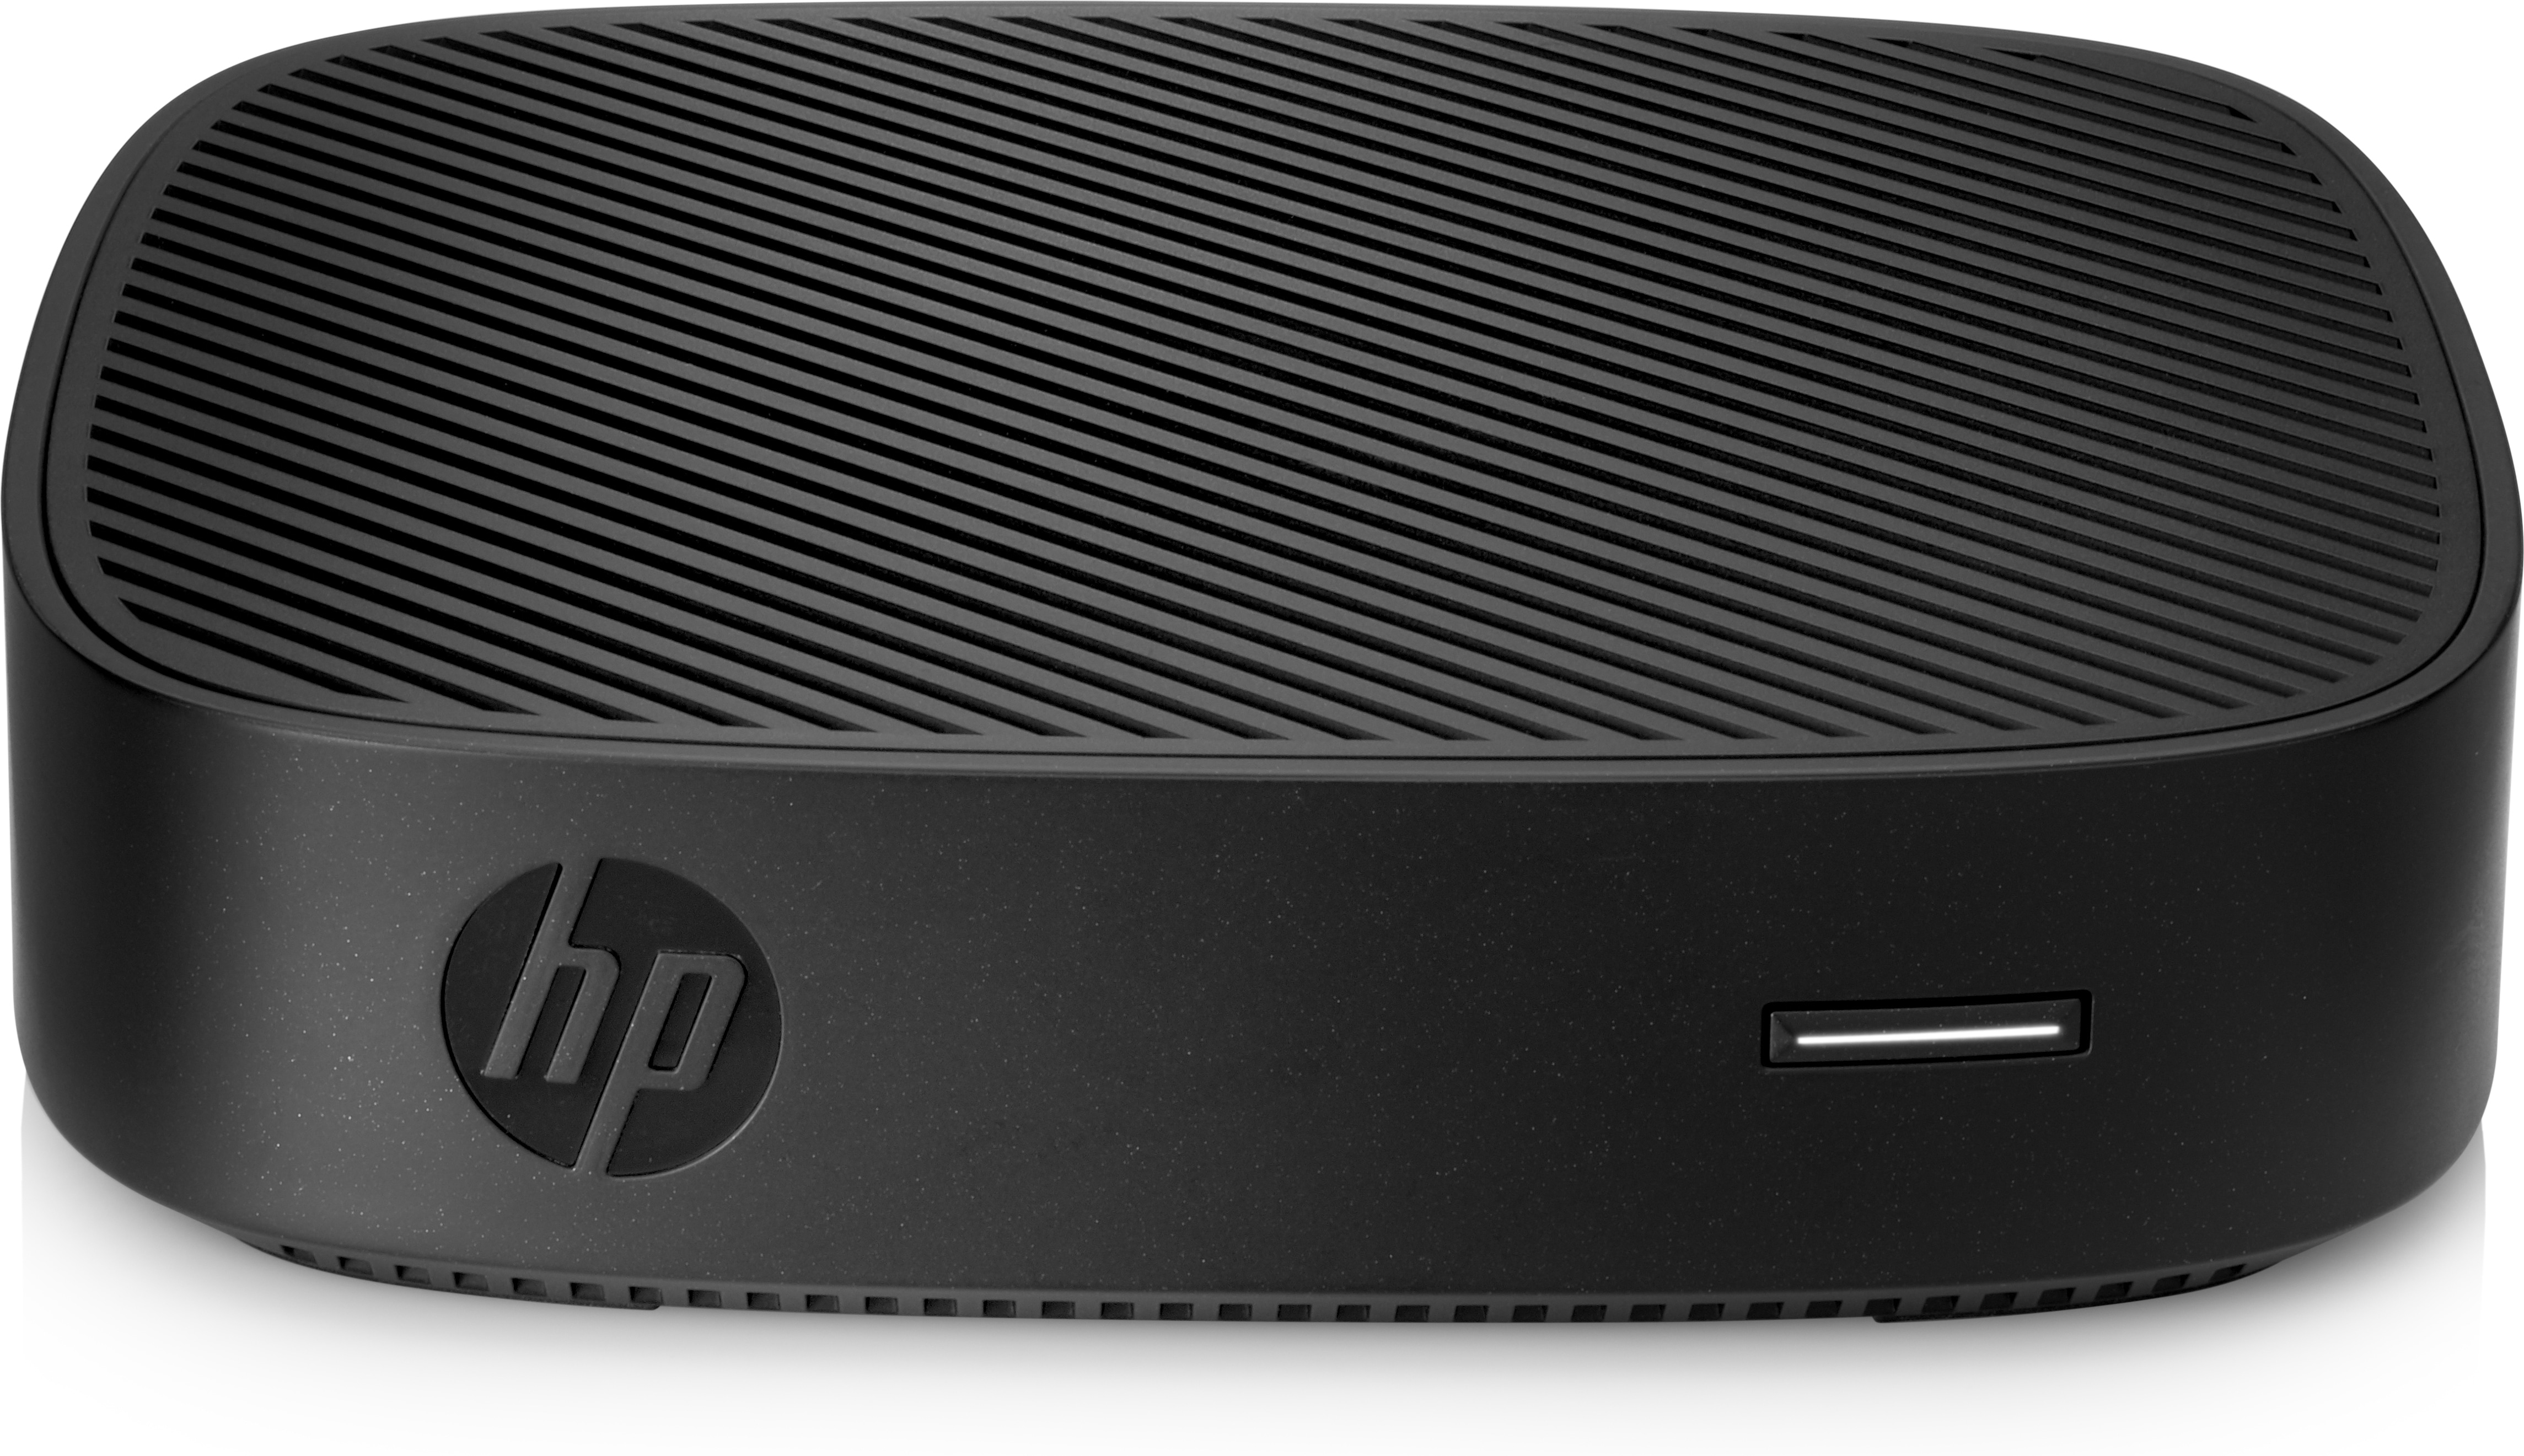 HP t430 - Thin client - DTS - 1 x Celeron N4000 / 1.1 GHz - RAM 4 GB - flash - eMMC 16 GB - UHD Graphics 600 - GigE - WLAN: Bluetooth, 802.11a/b/g/n/ac - HP Smart Zero Core - monitor: none - keyboard: US